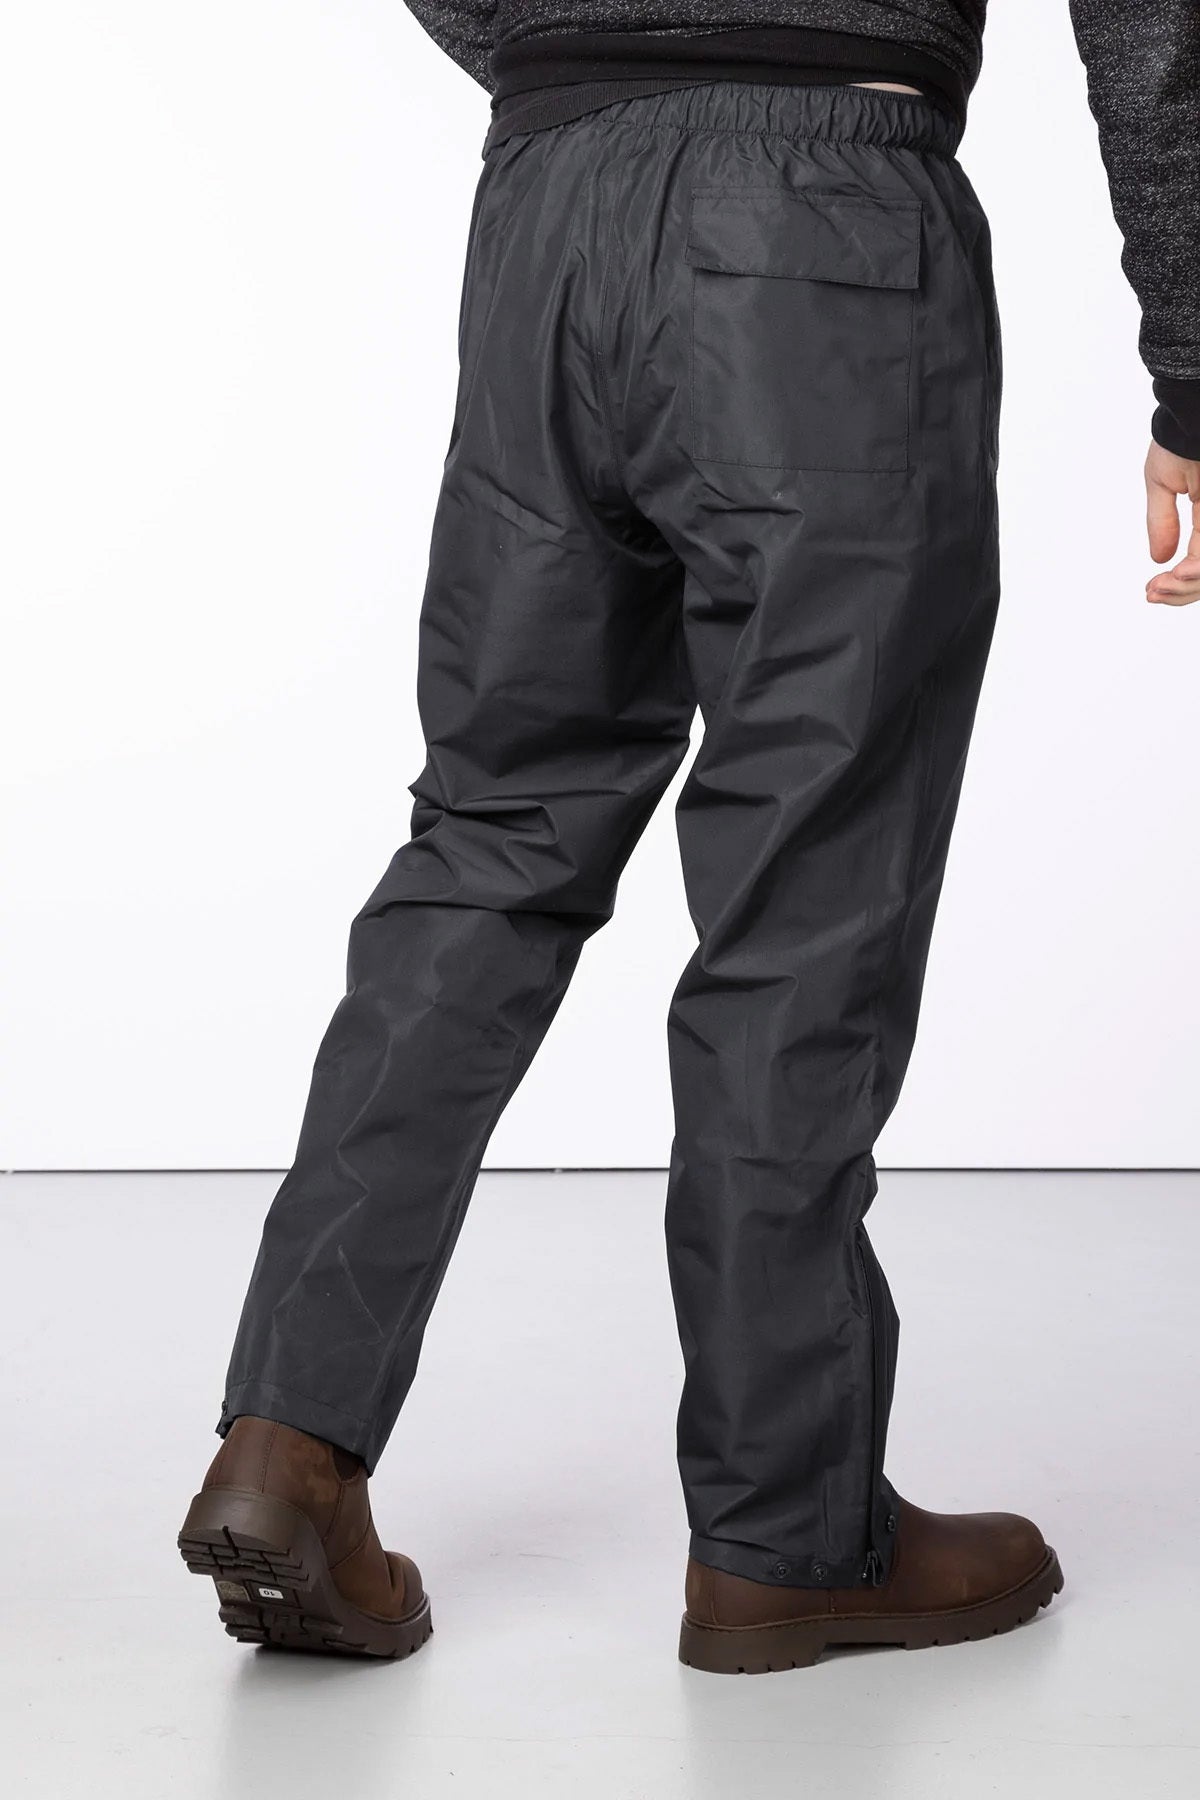 Men's Waterproof Overtrousers UK | Waterproof Trousers | Rydale UK